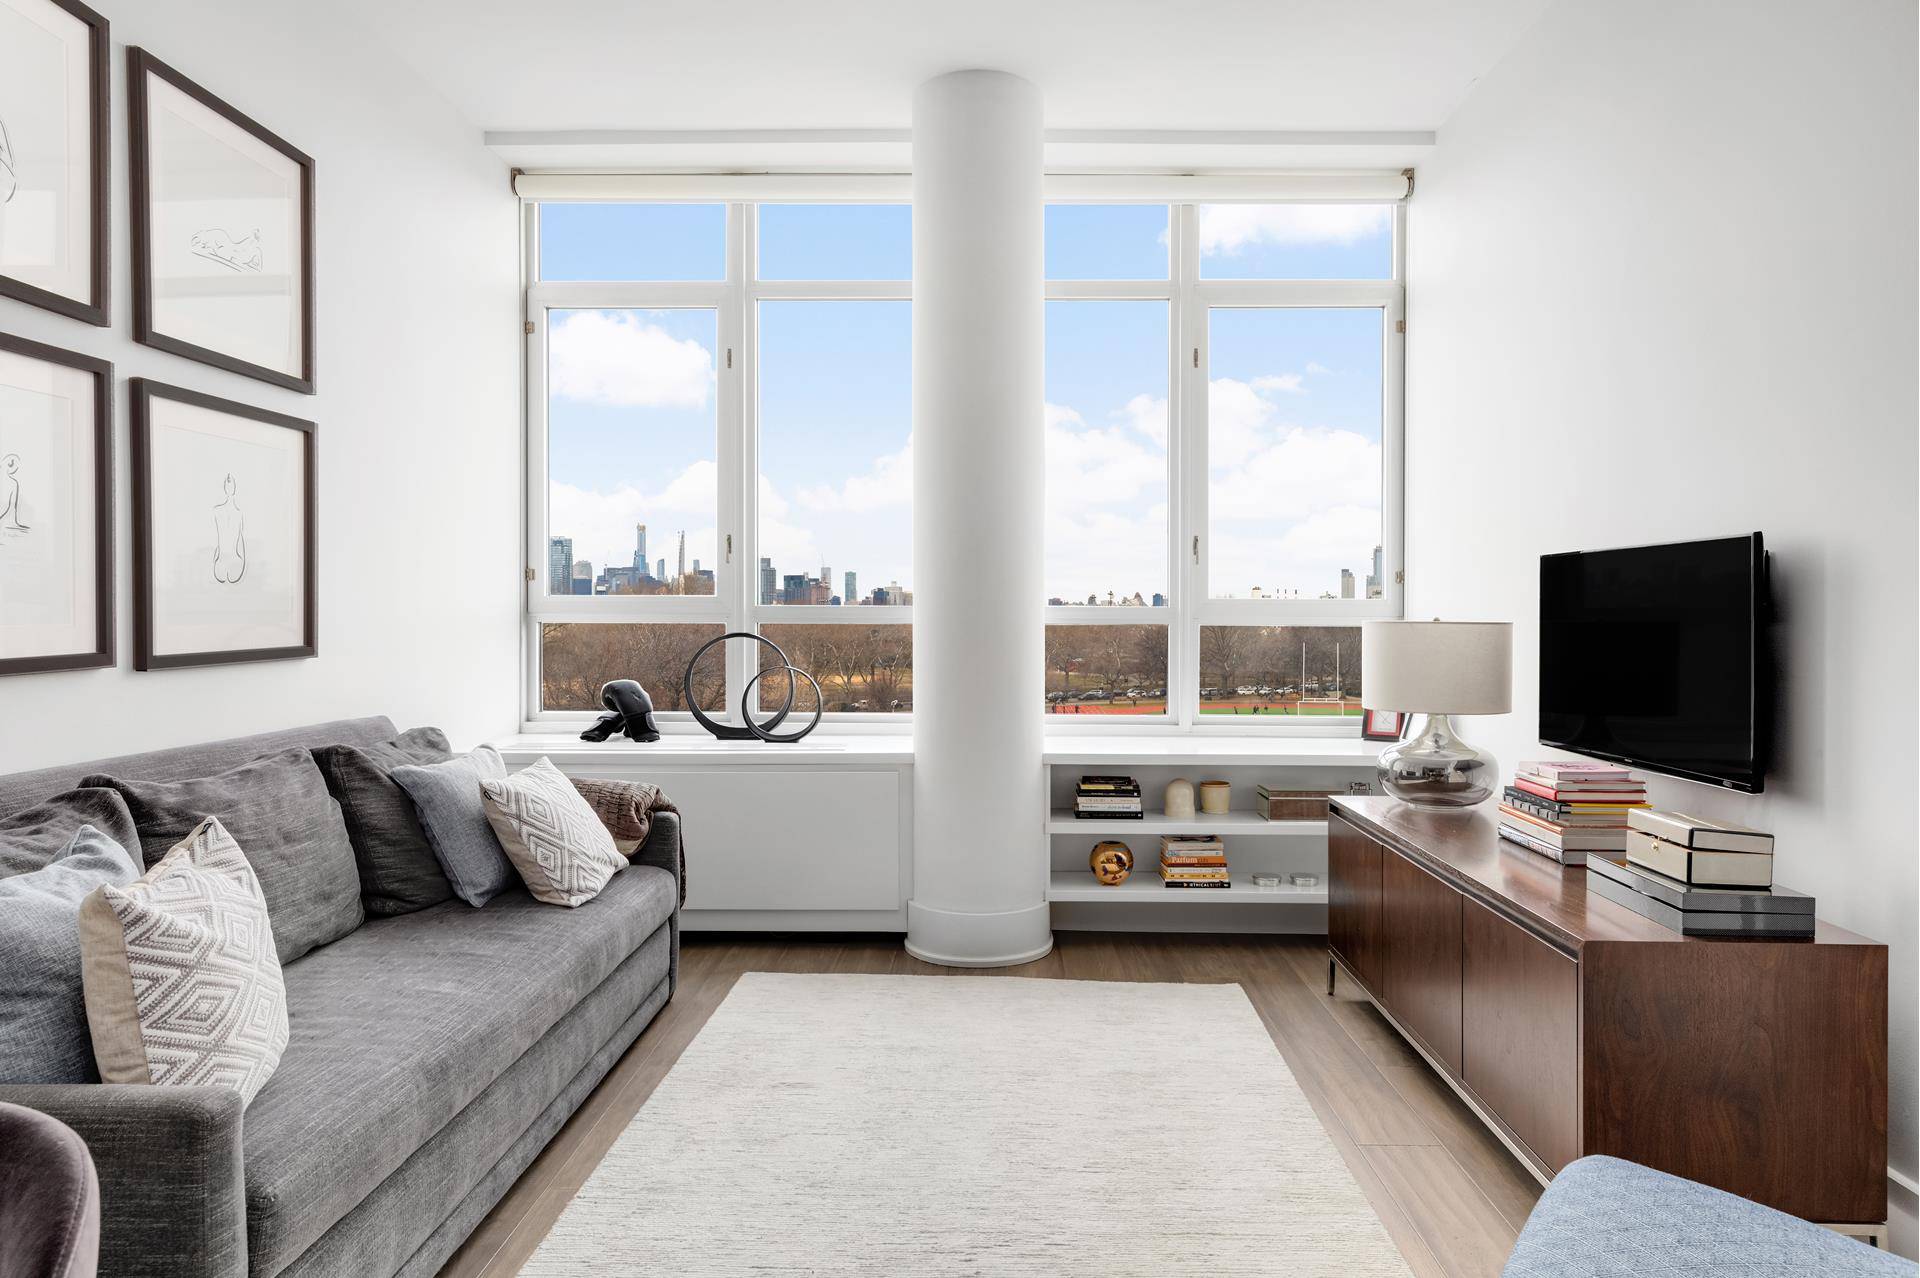 Amazing renovated 1 Bedroom 1 Bath Condominium overlooking McCarren Park with breathtaking views of Manhattan.